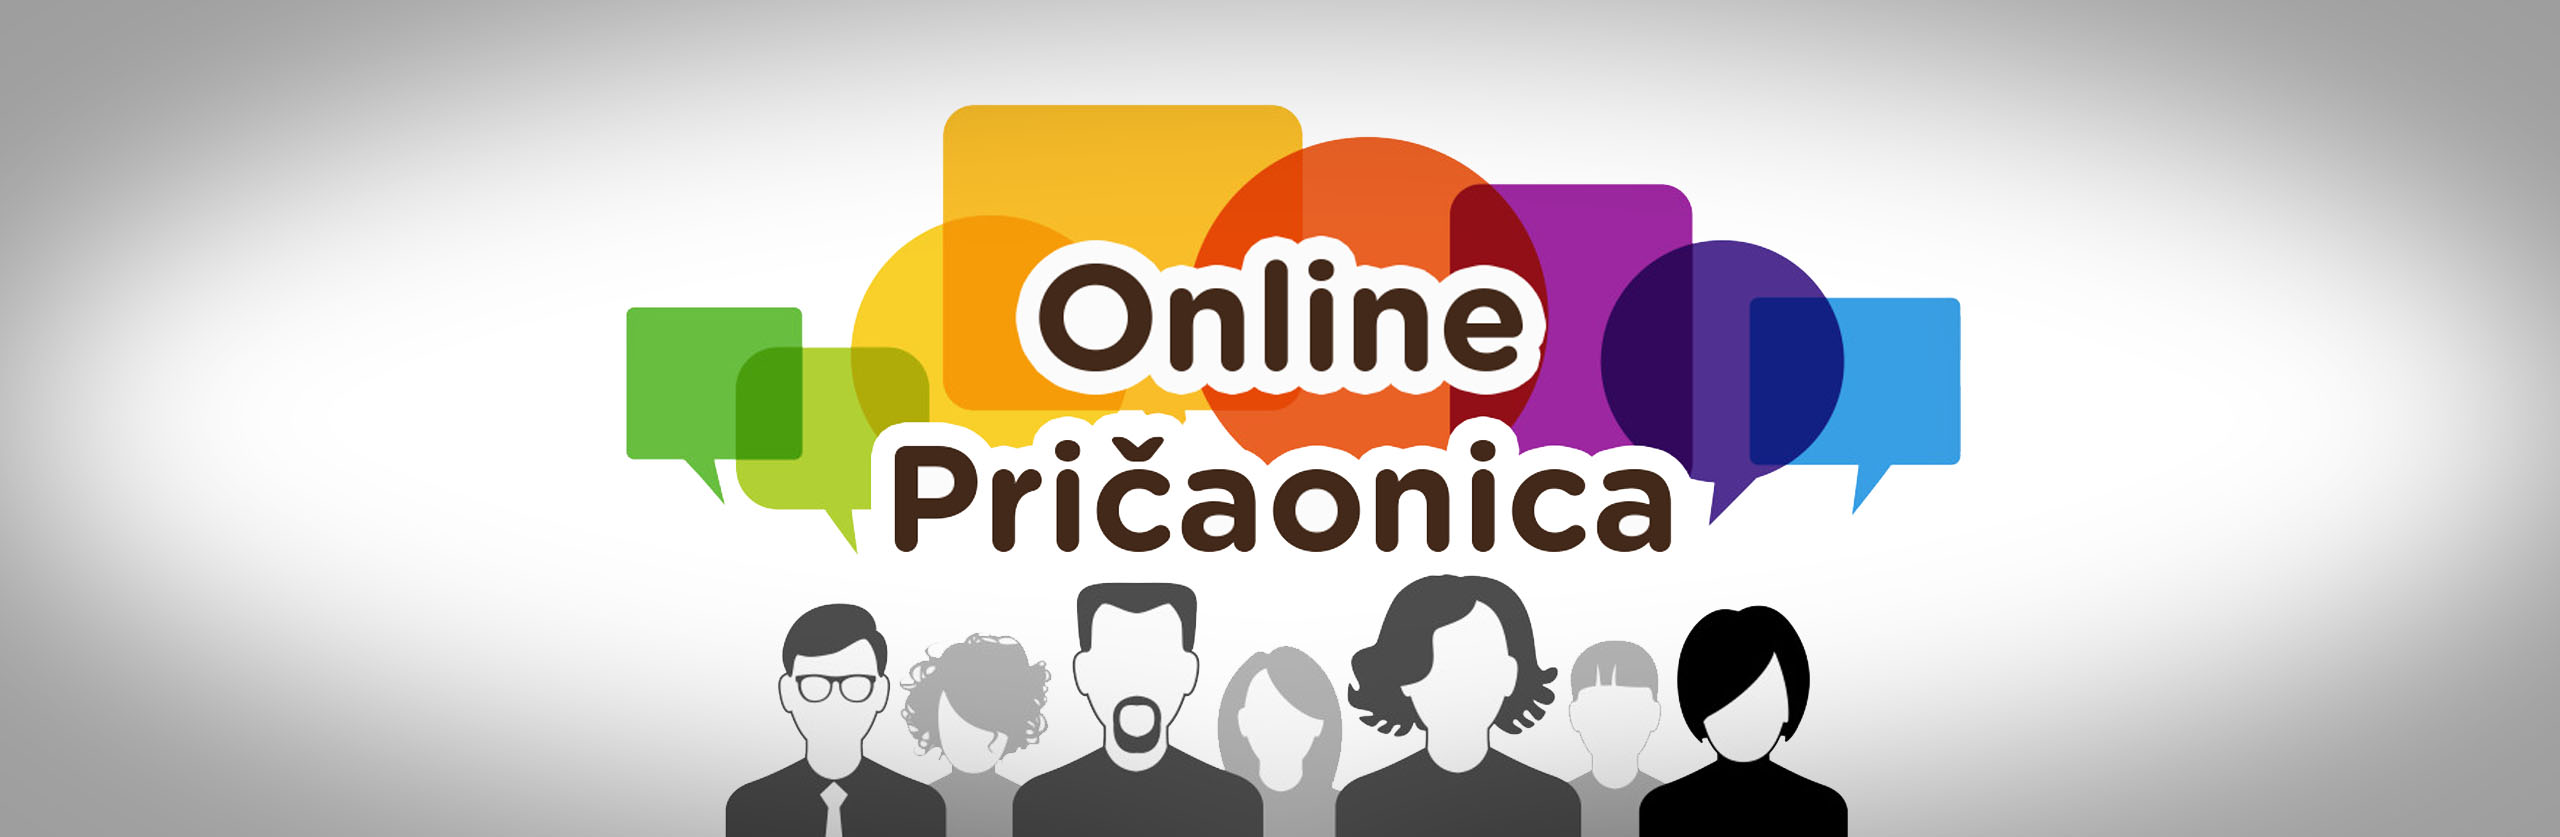 pricaonica_slider_online